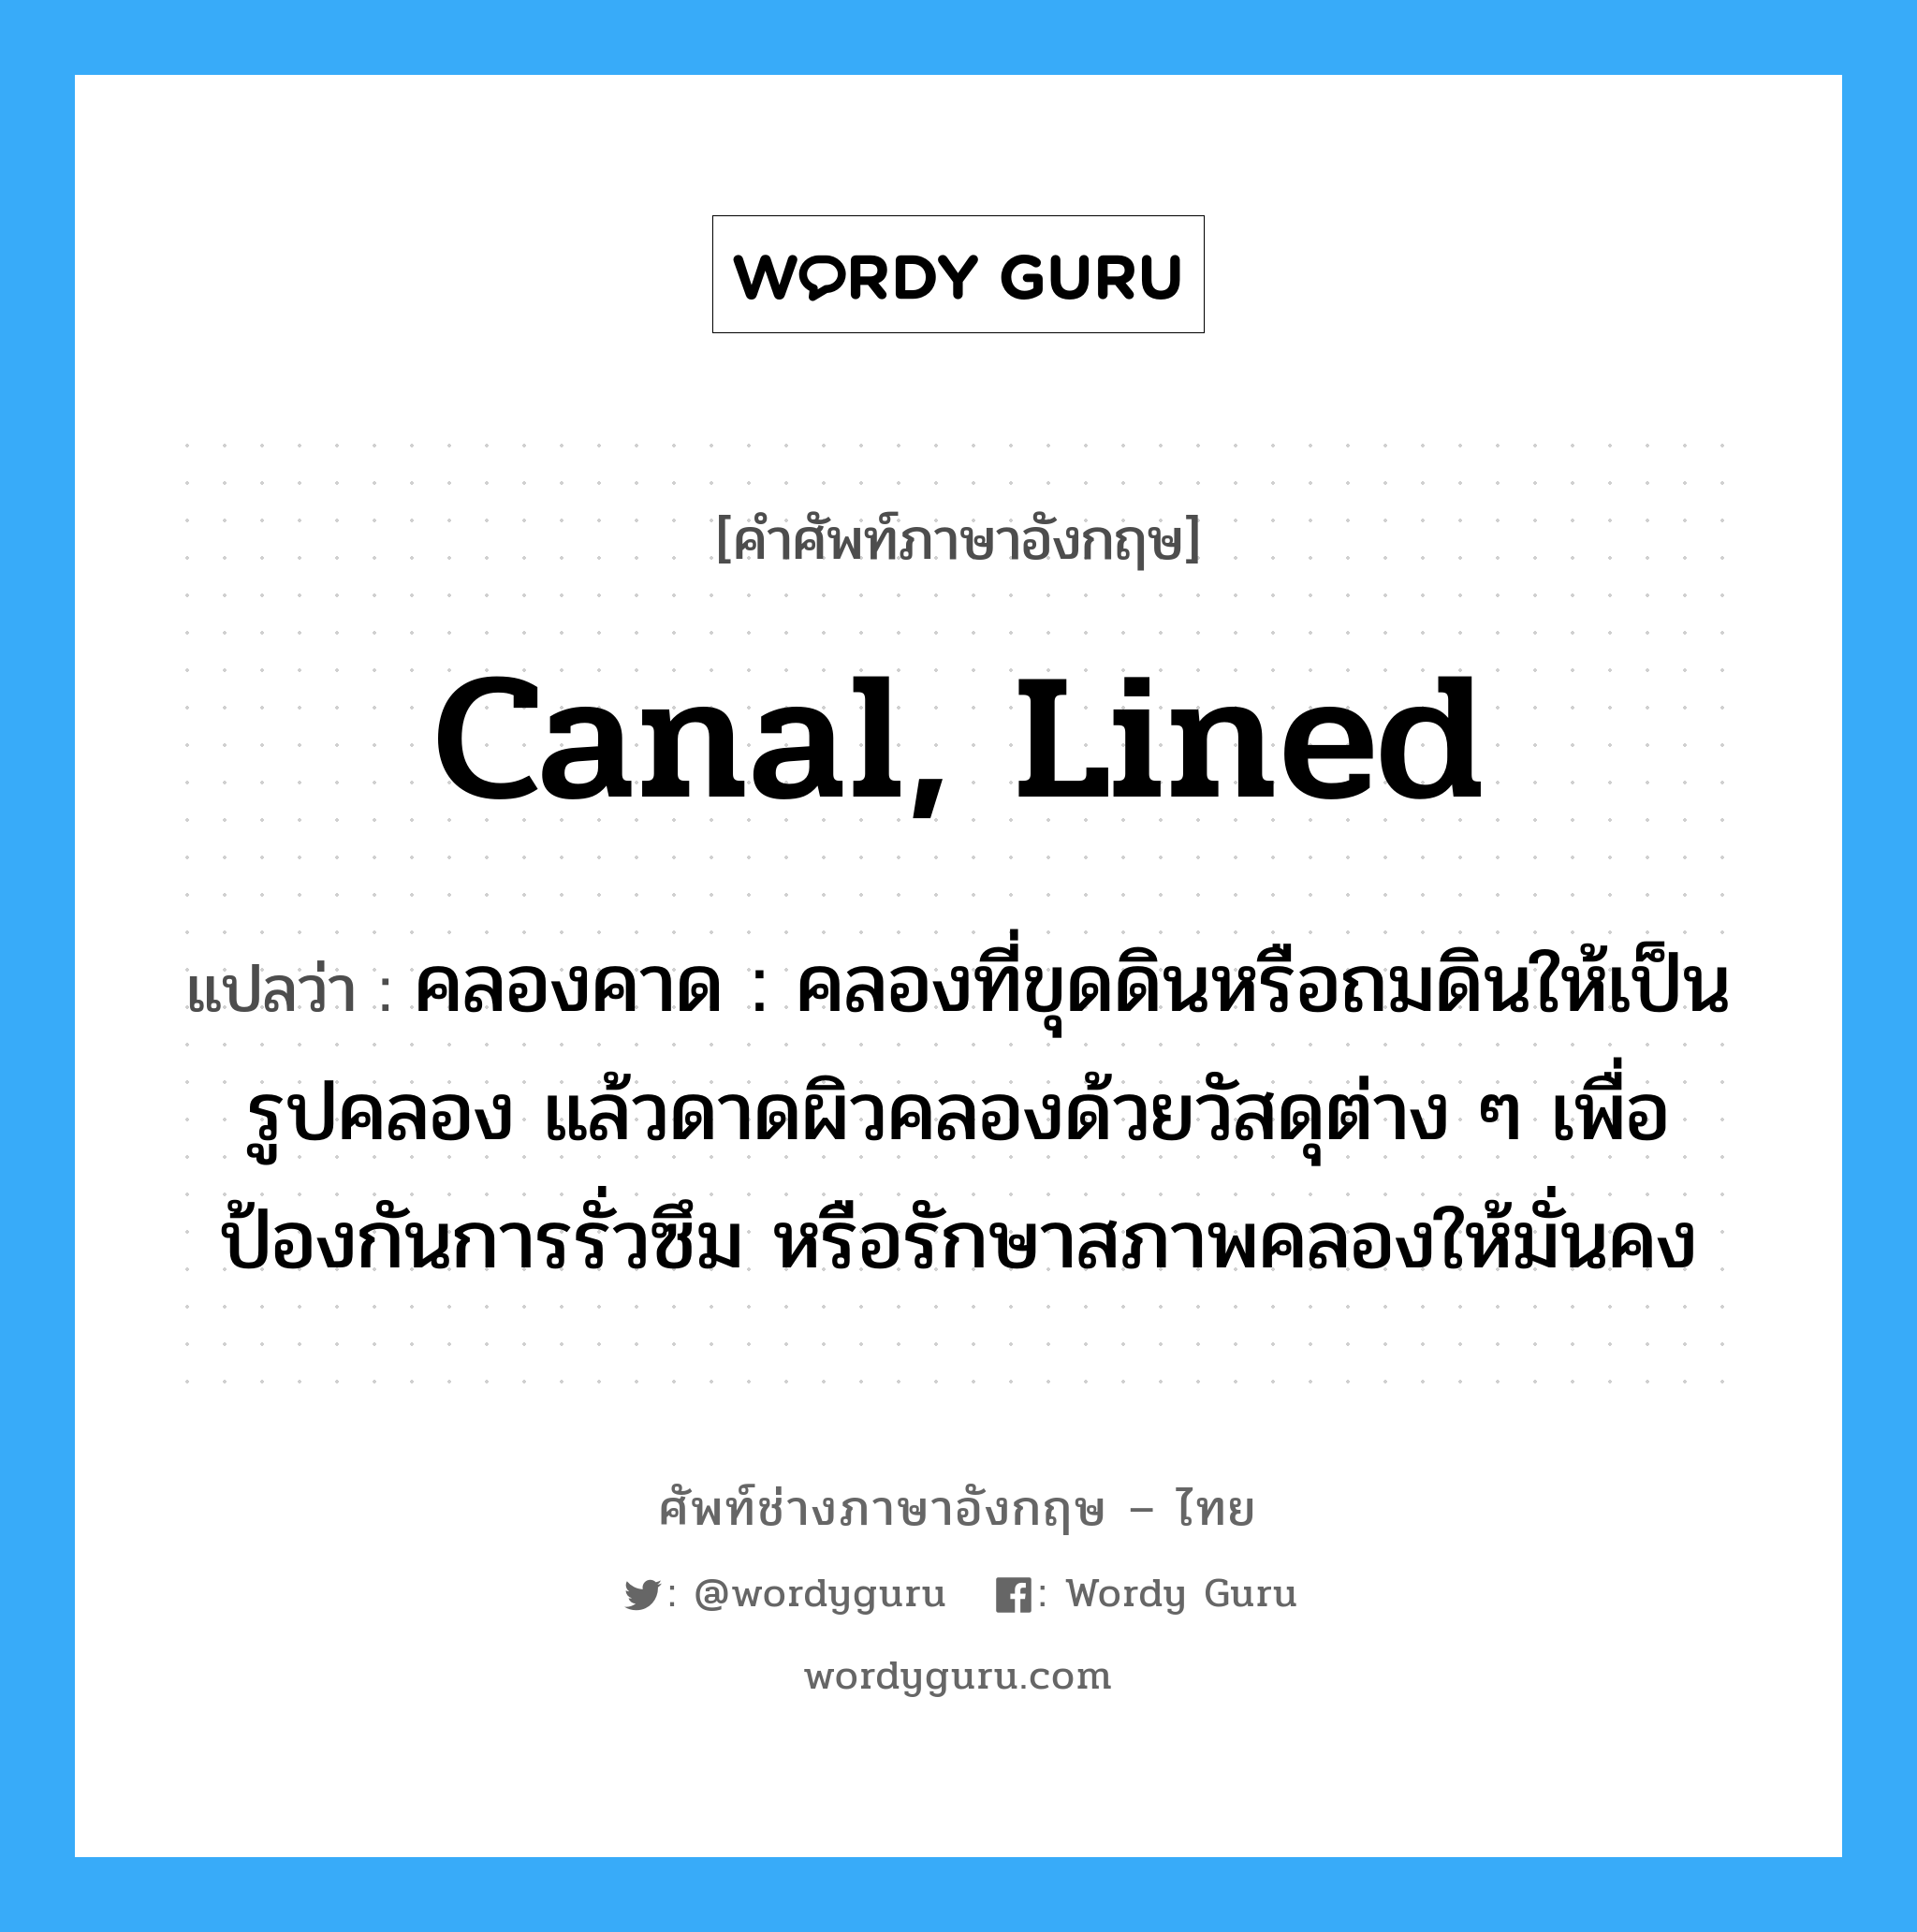 canal, lined แปลว่า?, คำศัพท์ช่างภาษาอังกฤษ - ไทย canal, lined คำศัพท์ภาษาอังกฤษ canal, lined แปลว่า คลองคาด : คลองที่ขุดดินหรือถมดินให้เป็นรูปคลอง แล้วดาดผิวคลองด้วยวัสดุต่าง ๆ เพื่อป้องกันการรั่วซึม หรือรักษาสภาพคลองให้มั่นคง